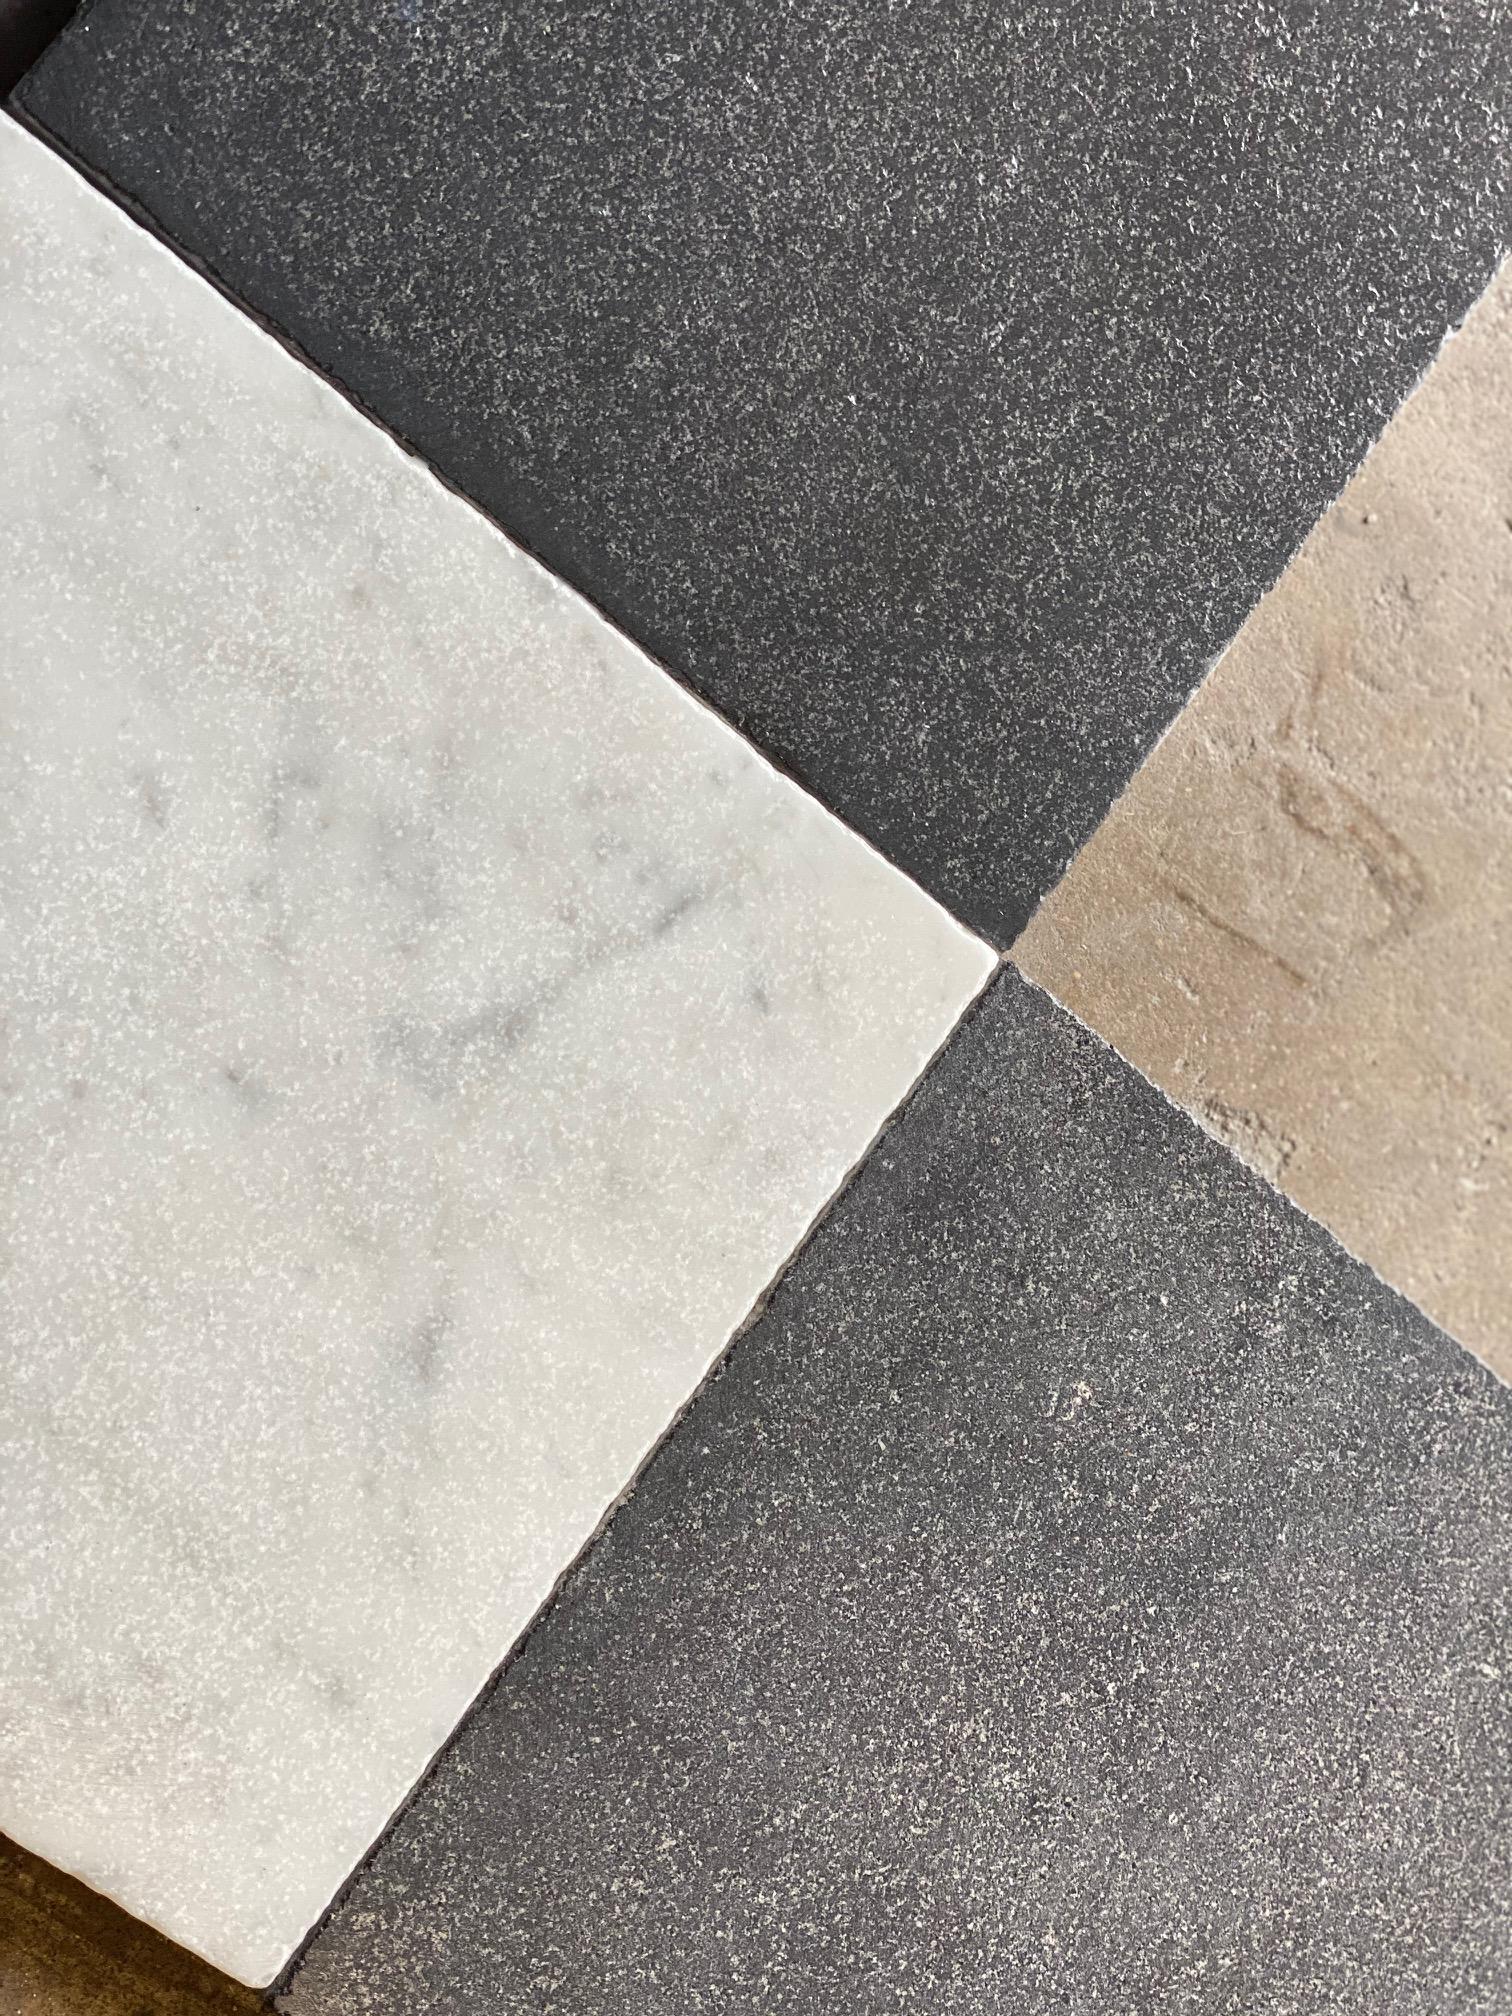 limestone checkered floor